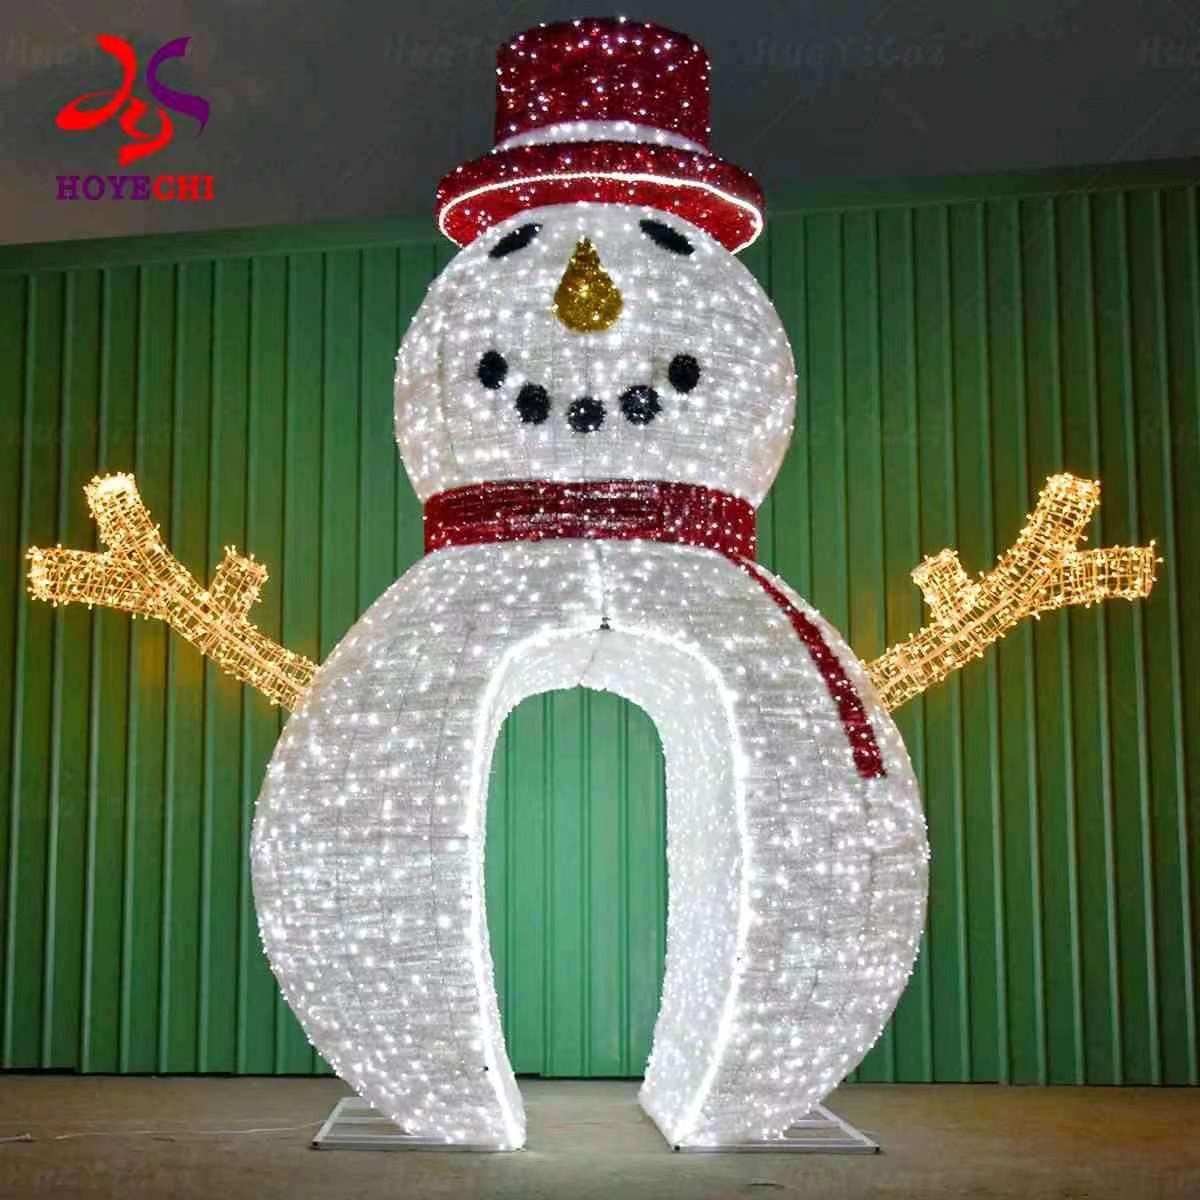 Snowman led light, outdoor snowman decoration